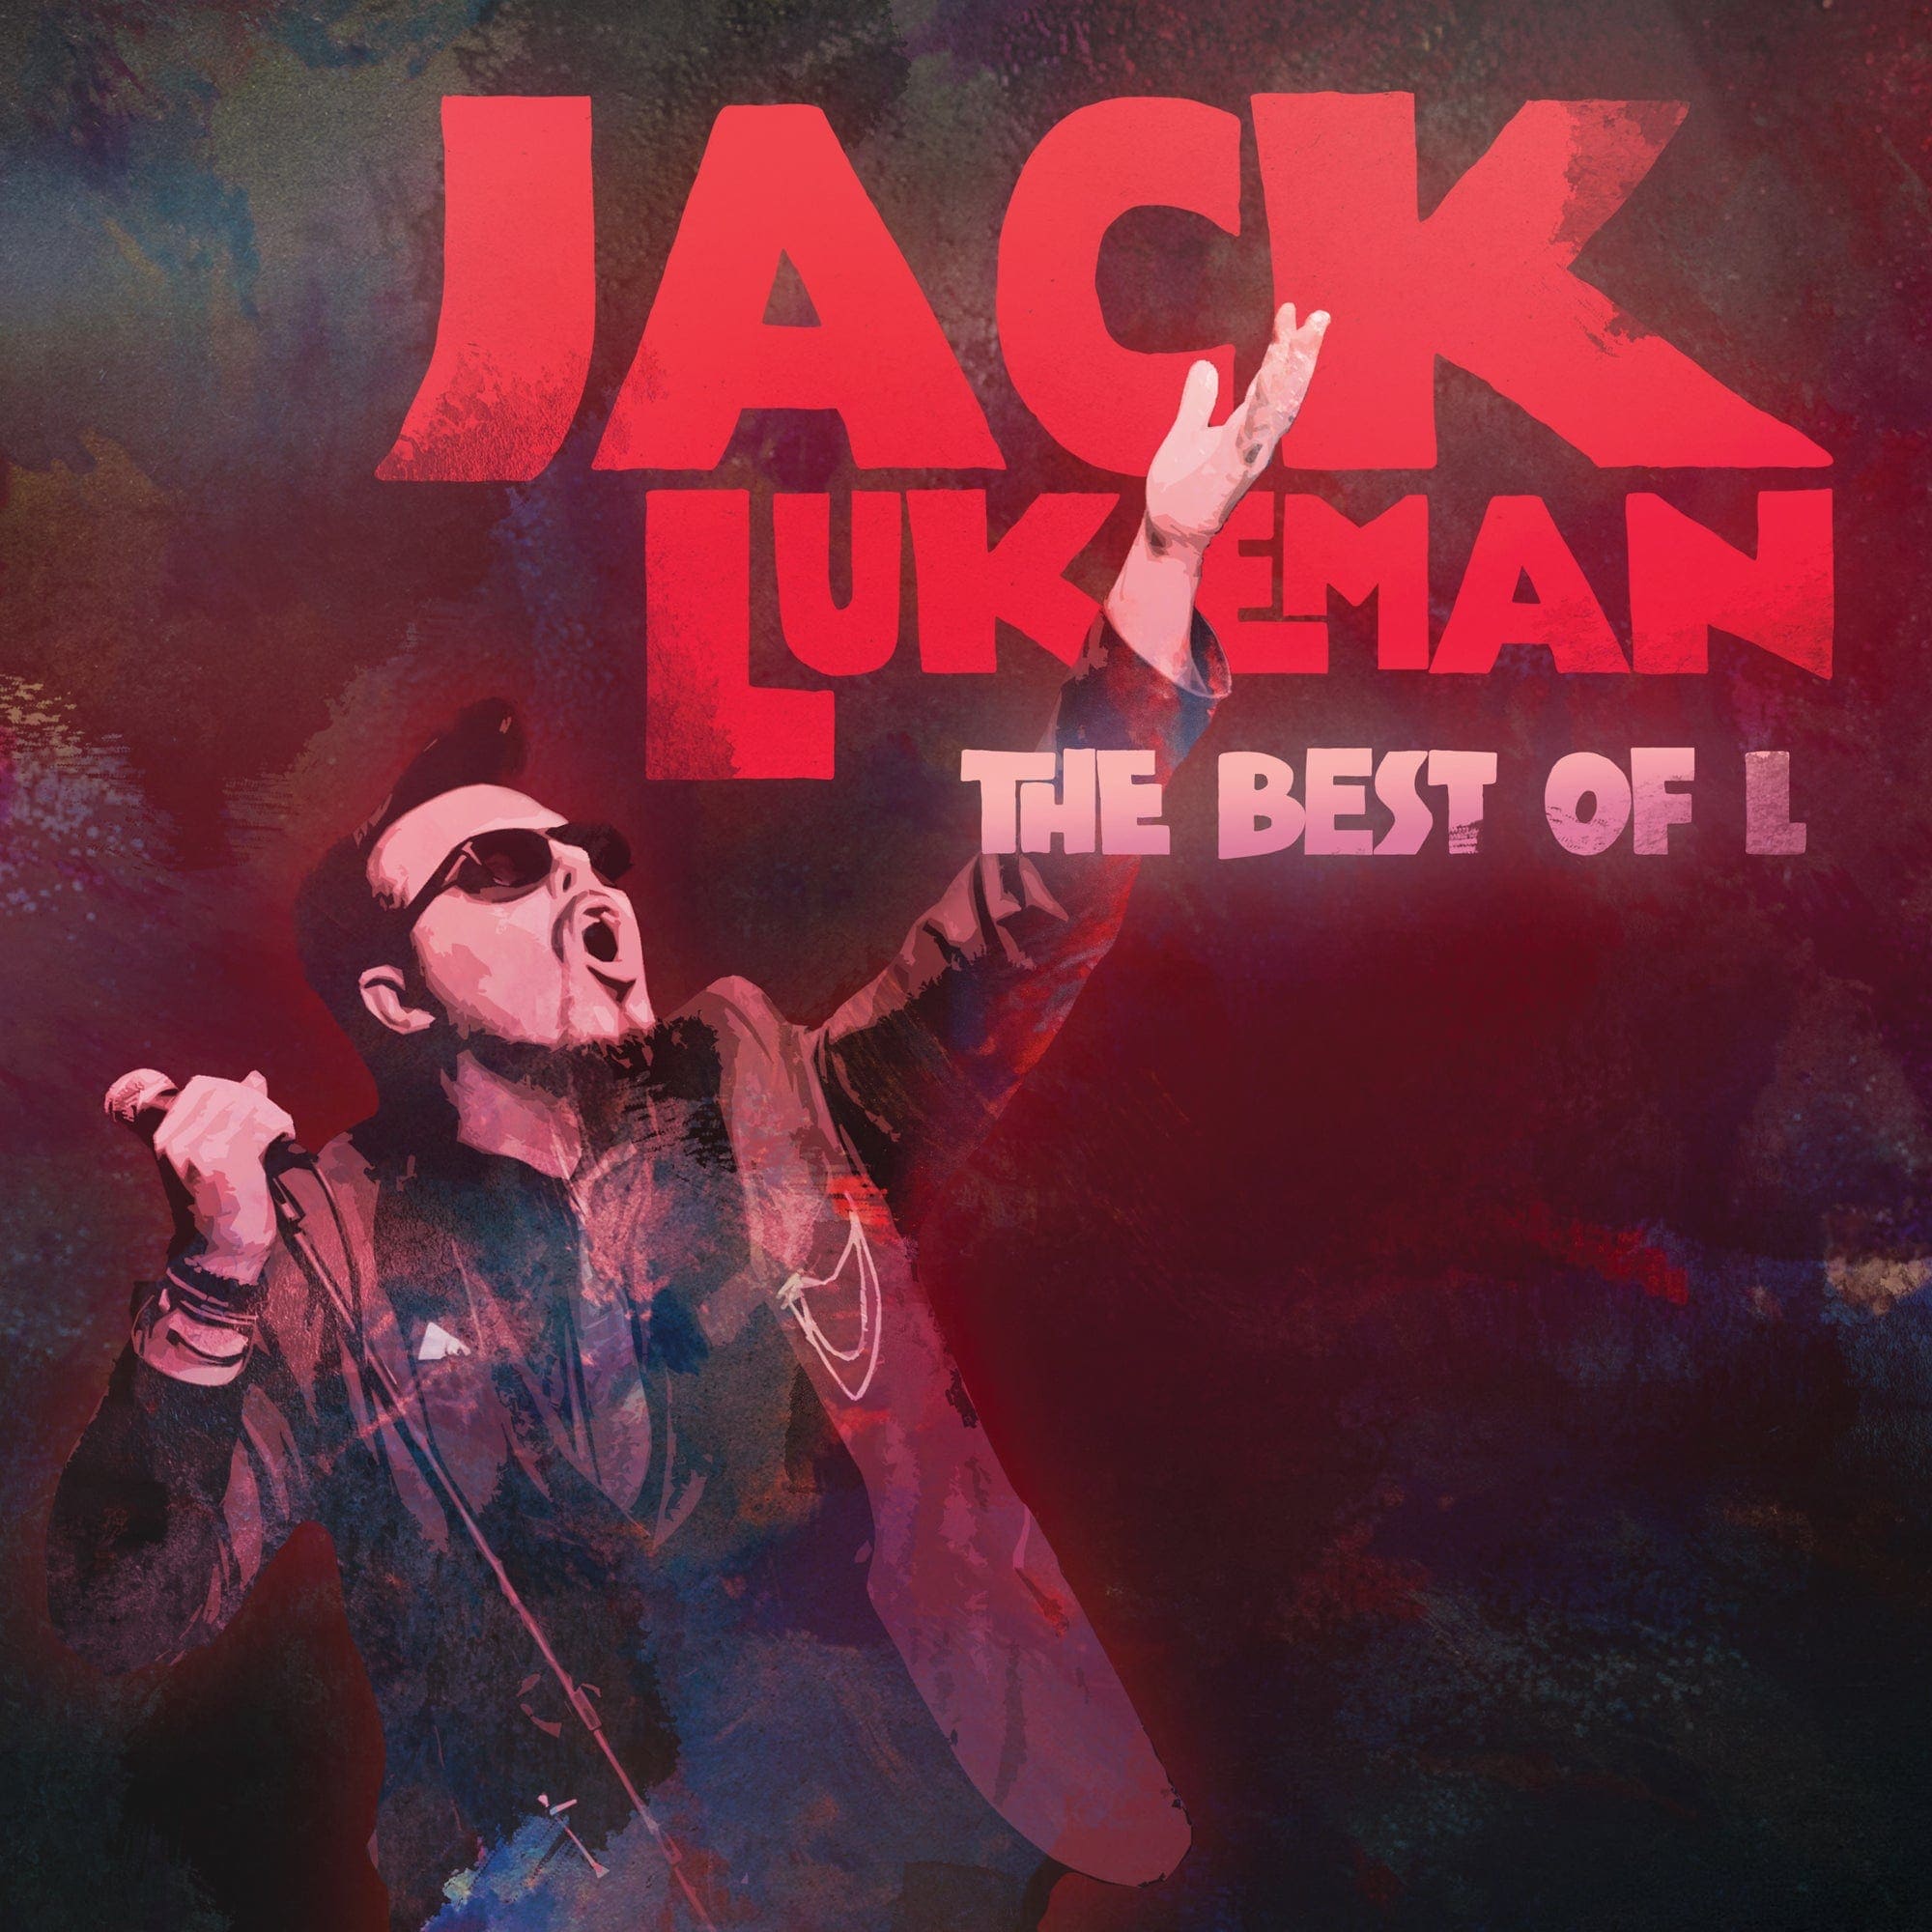 The Best of L - Jack Lukeman [CD]